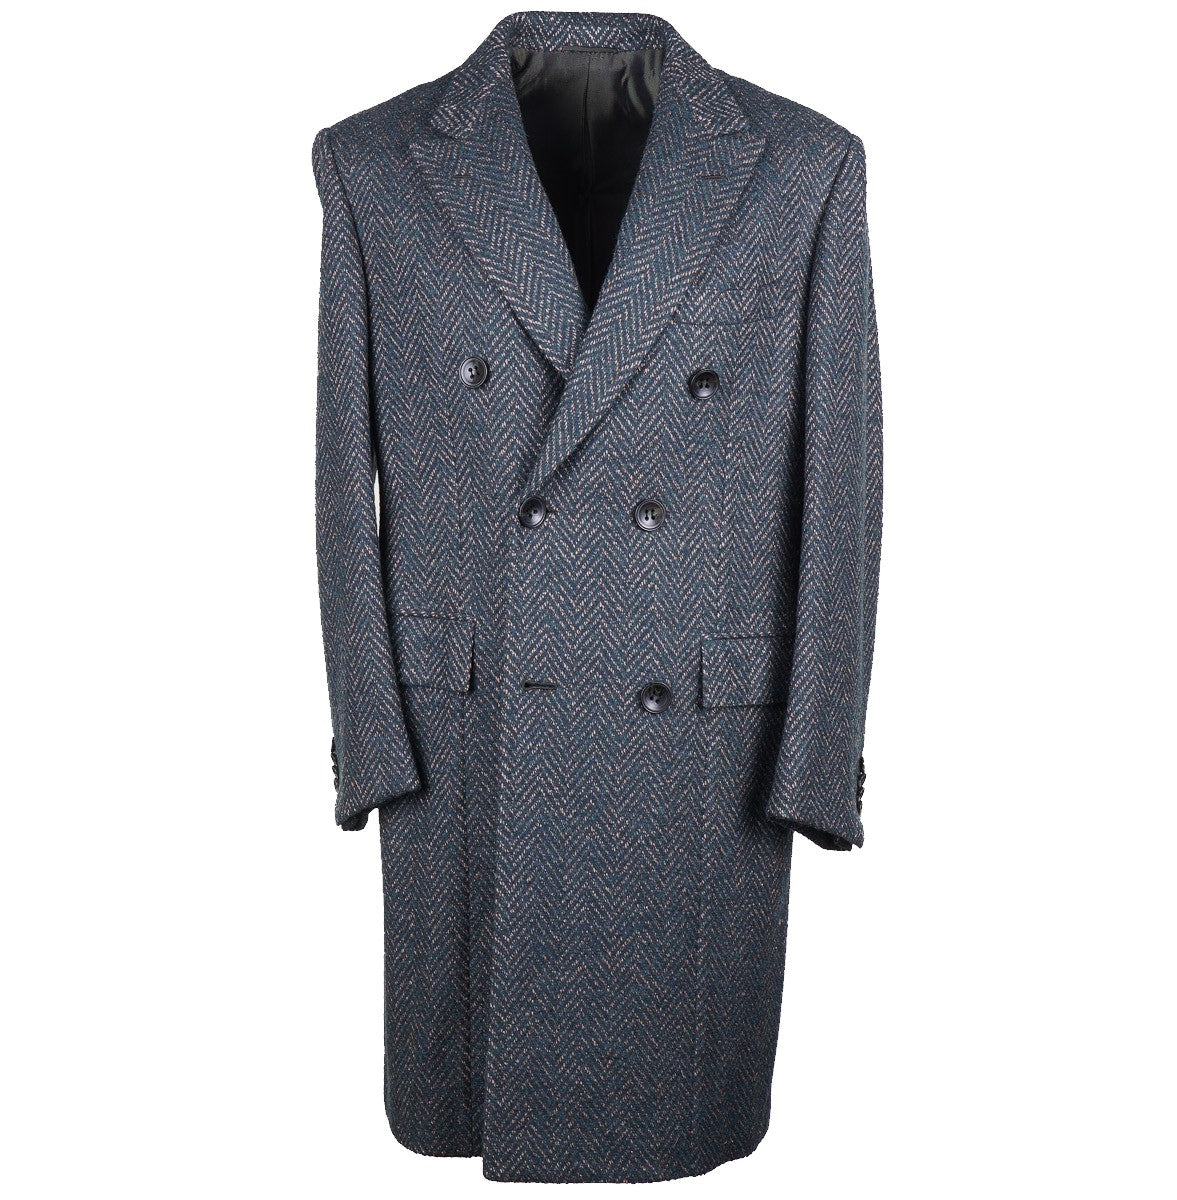 Kiton Cashmere-Alpaca-Wool Overcoat - Top Shelf Apparel